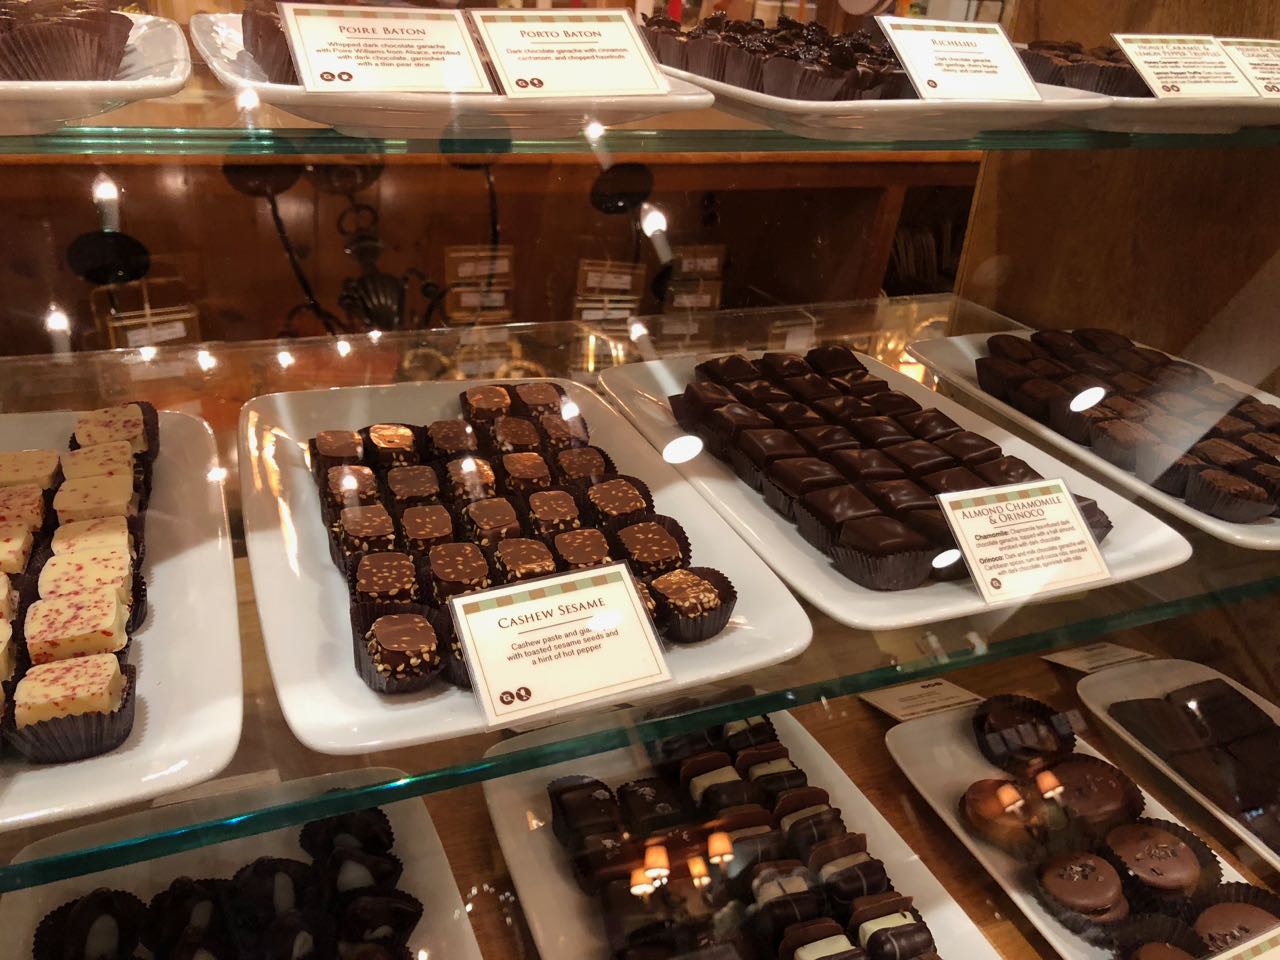 dessert and chocolate display case at Burdick's